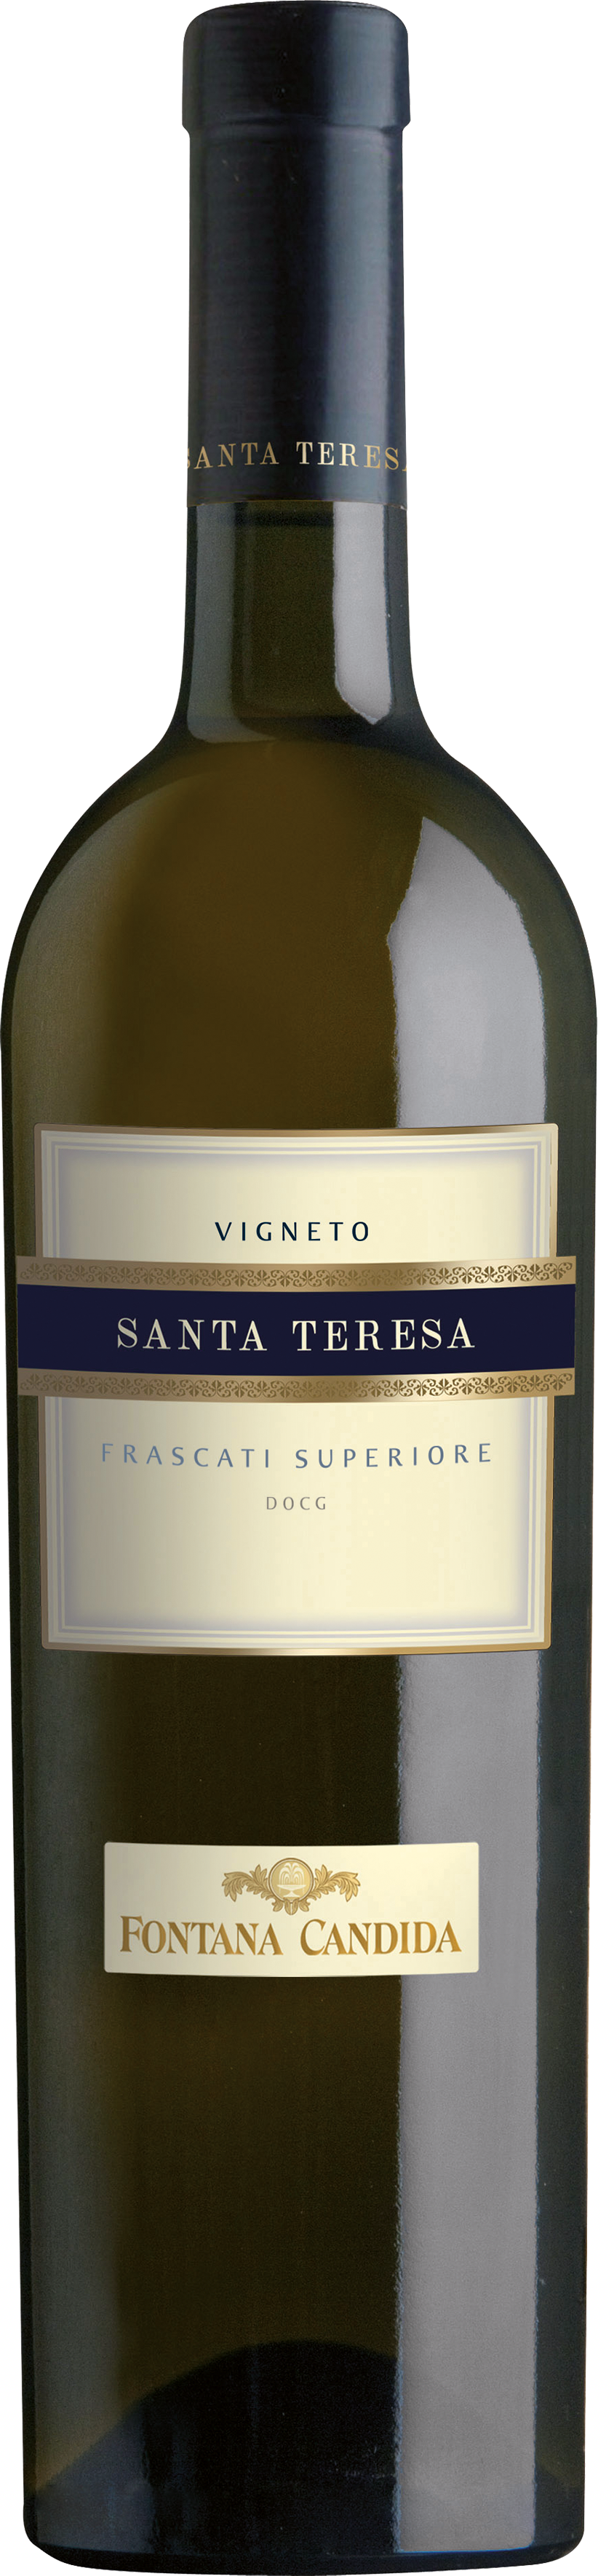 Vigneto-Santa-Teresa-Frascati-Superiore